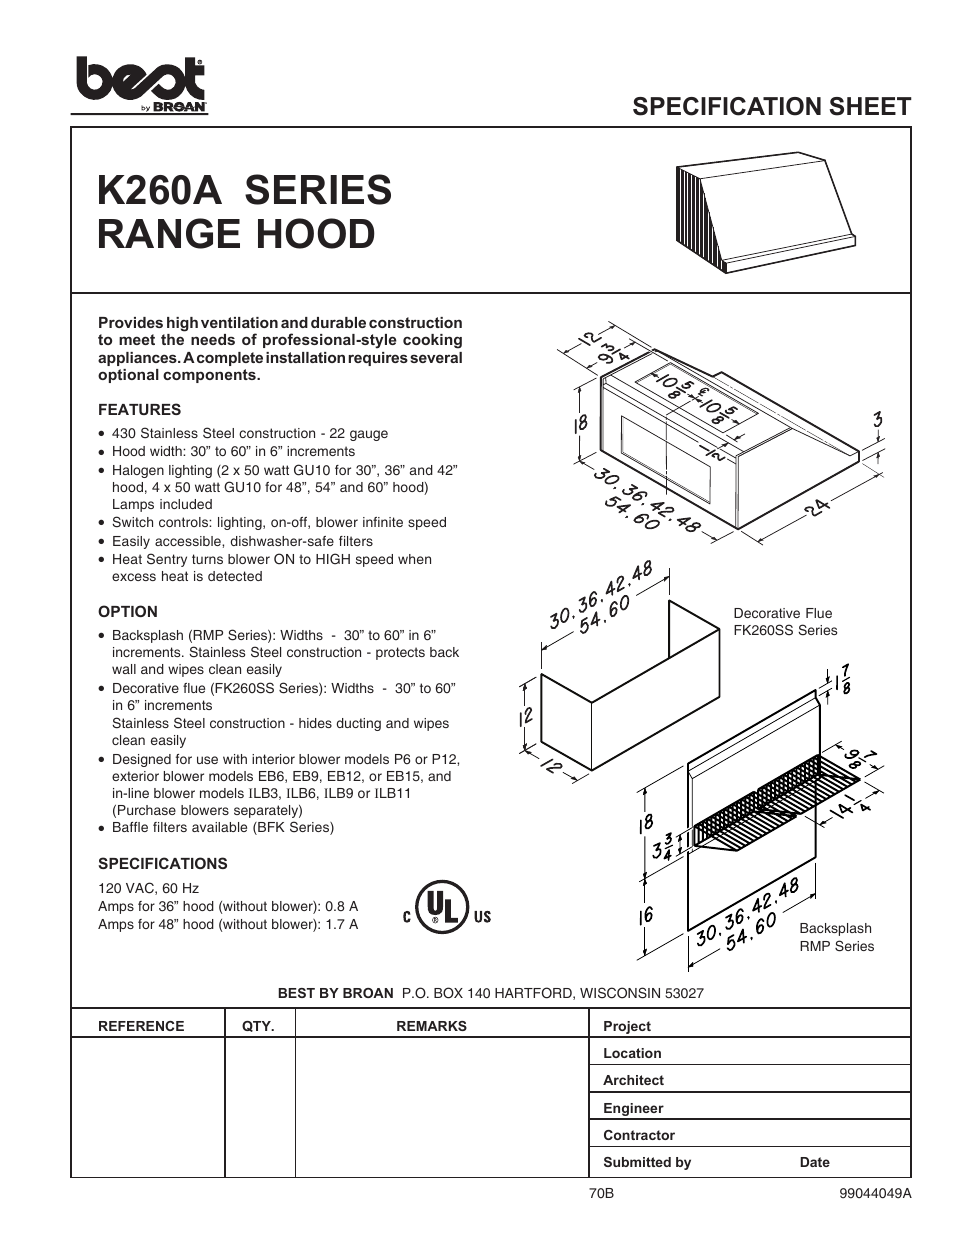 K260A series